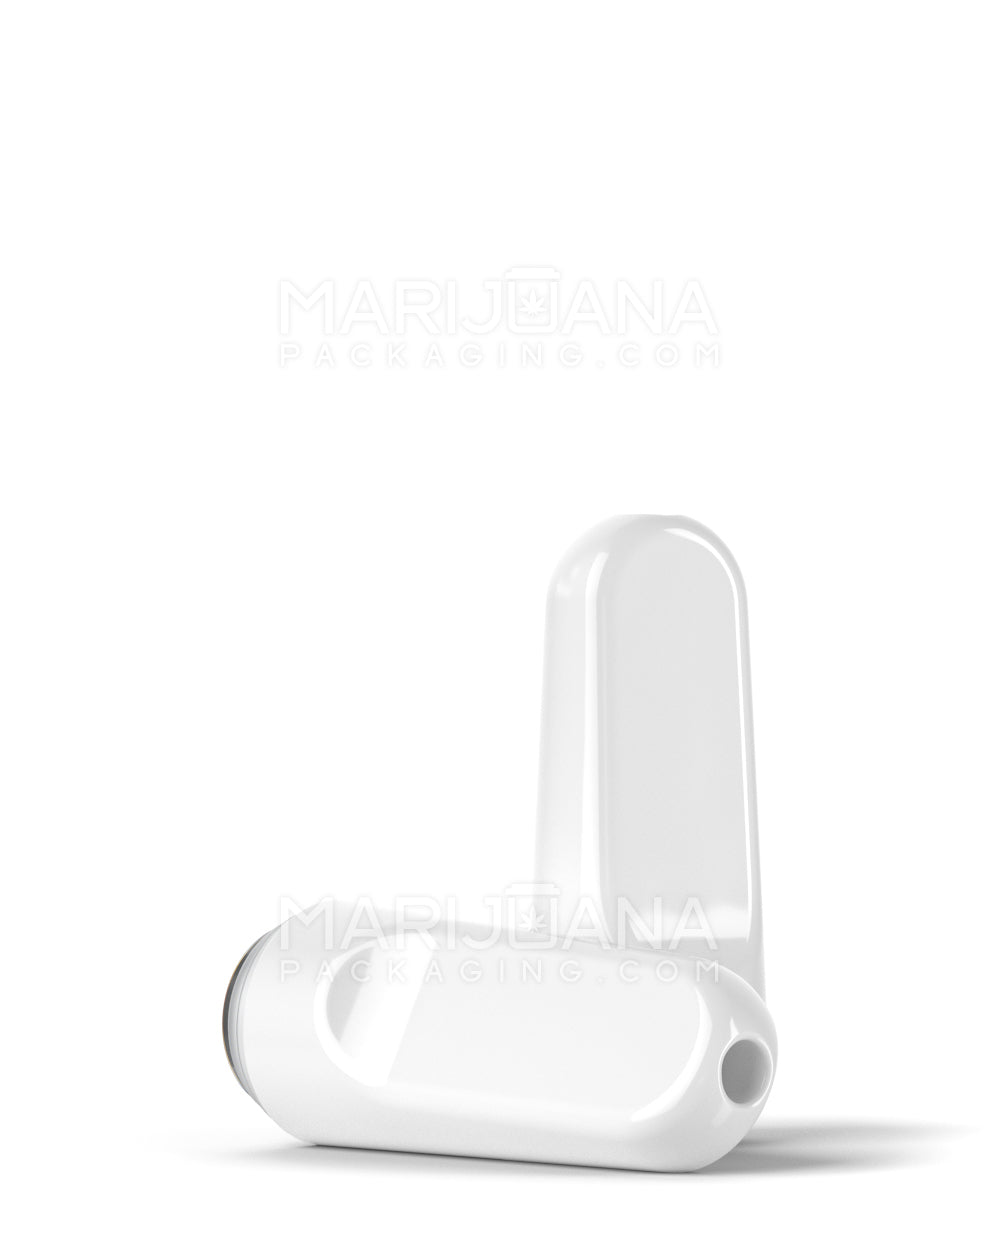 RAE Flat Vape Mouthpiece for Hand Press Ceramic Cartridges | White Ceramic - Hand Press | Sample